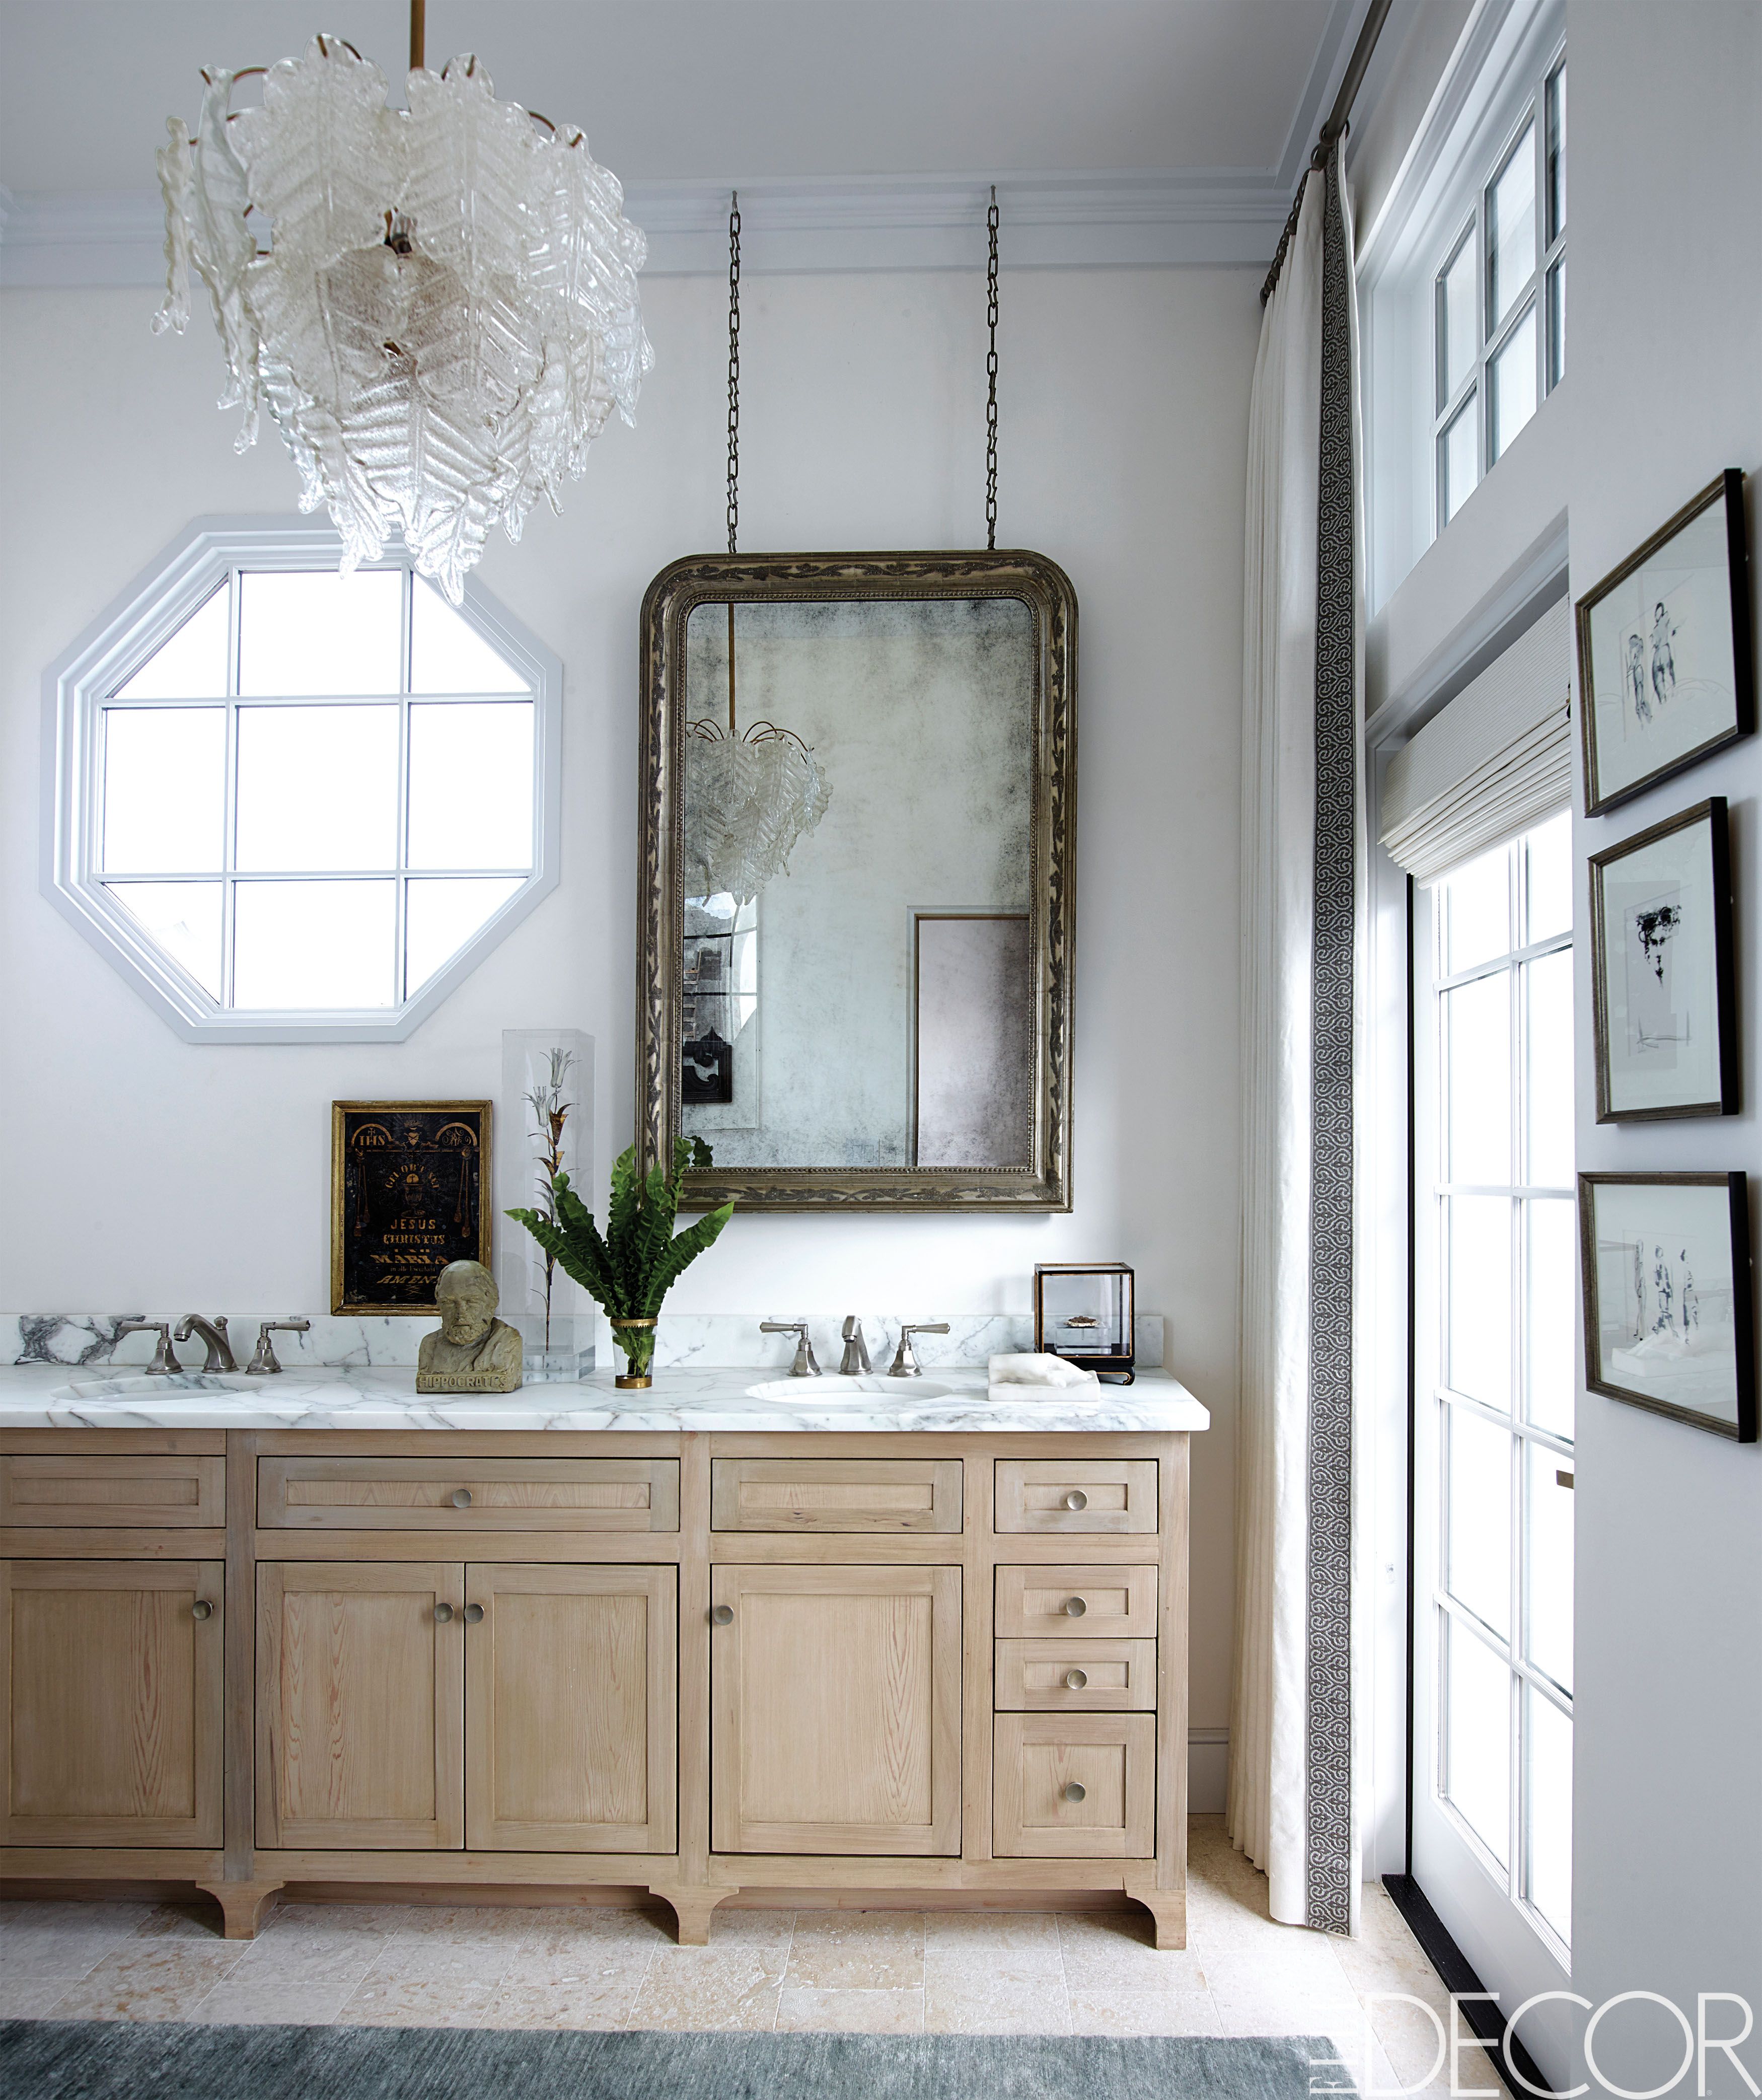 Bathroom Vanity Mirrors For Interior Design, Vanity Mirrors For Bathroom Ideas